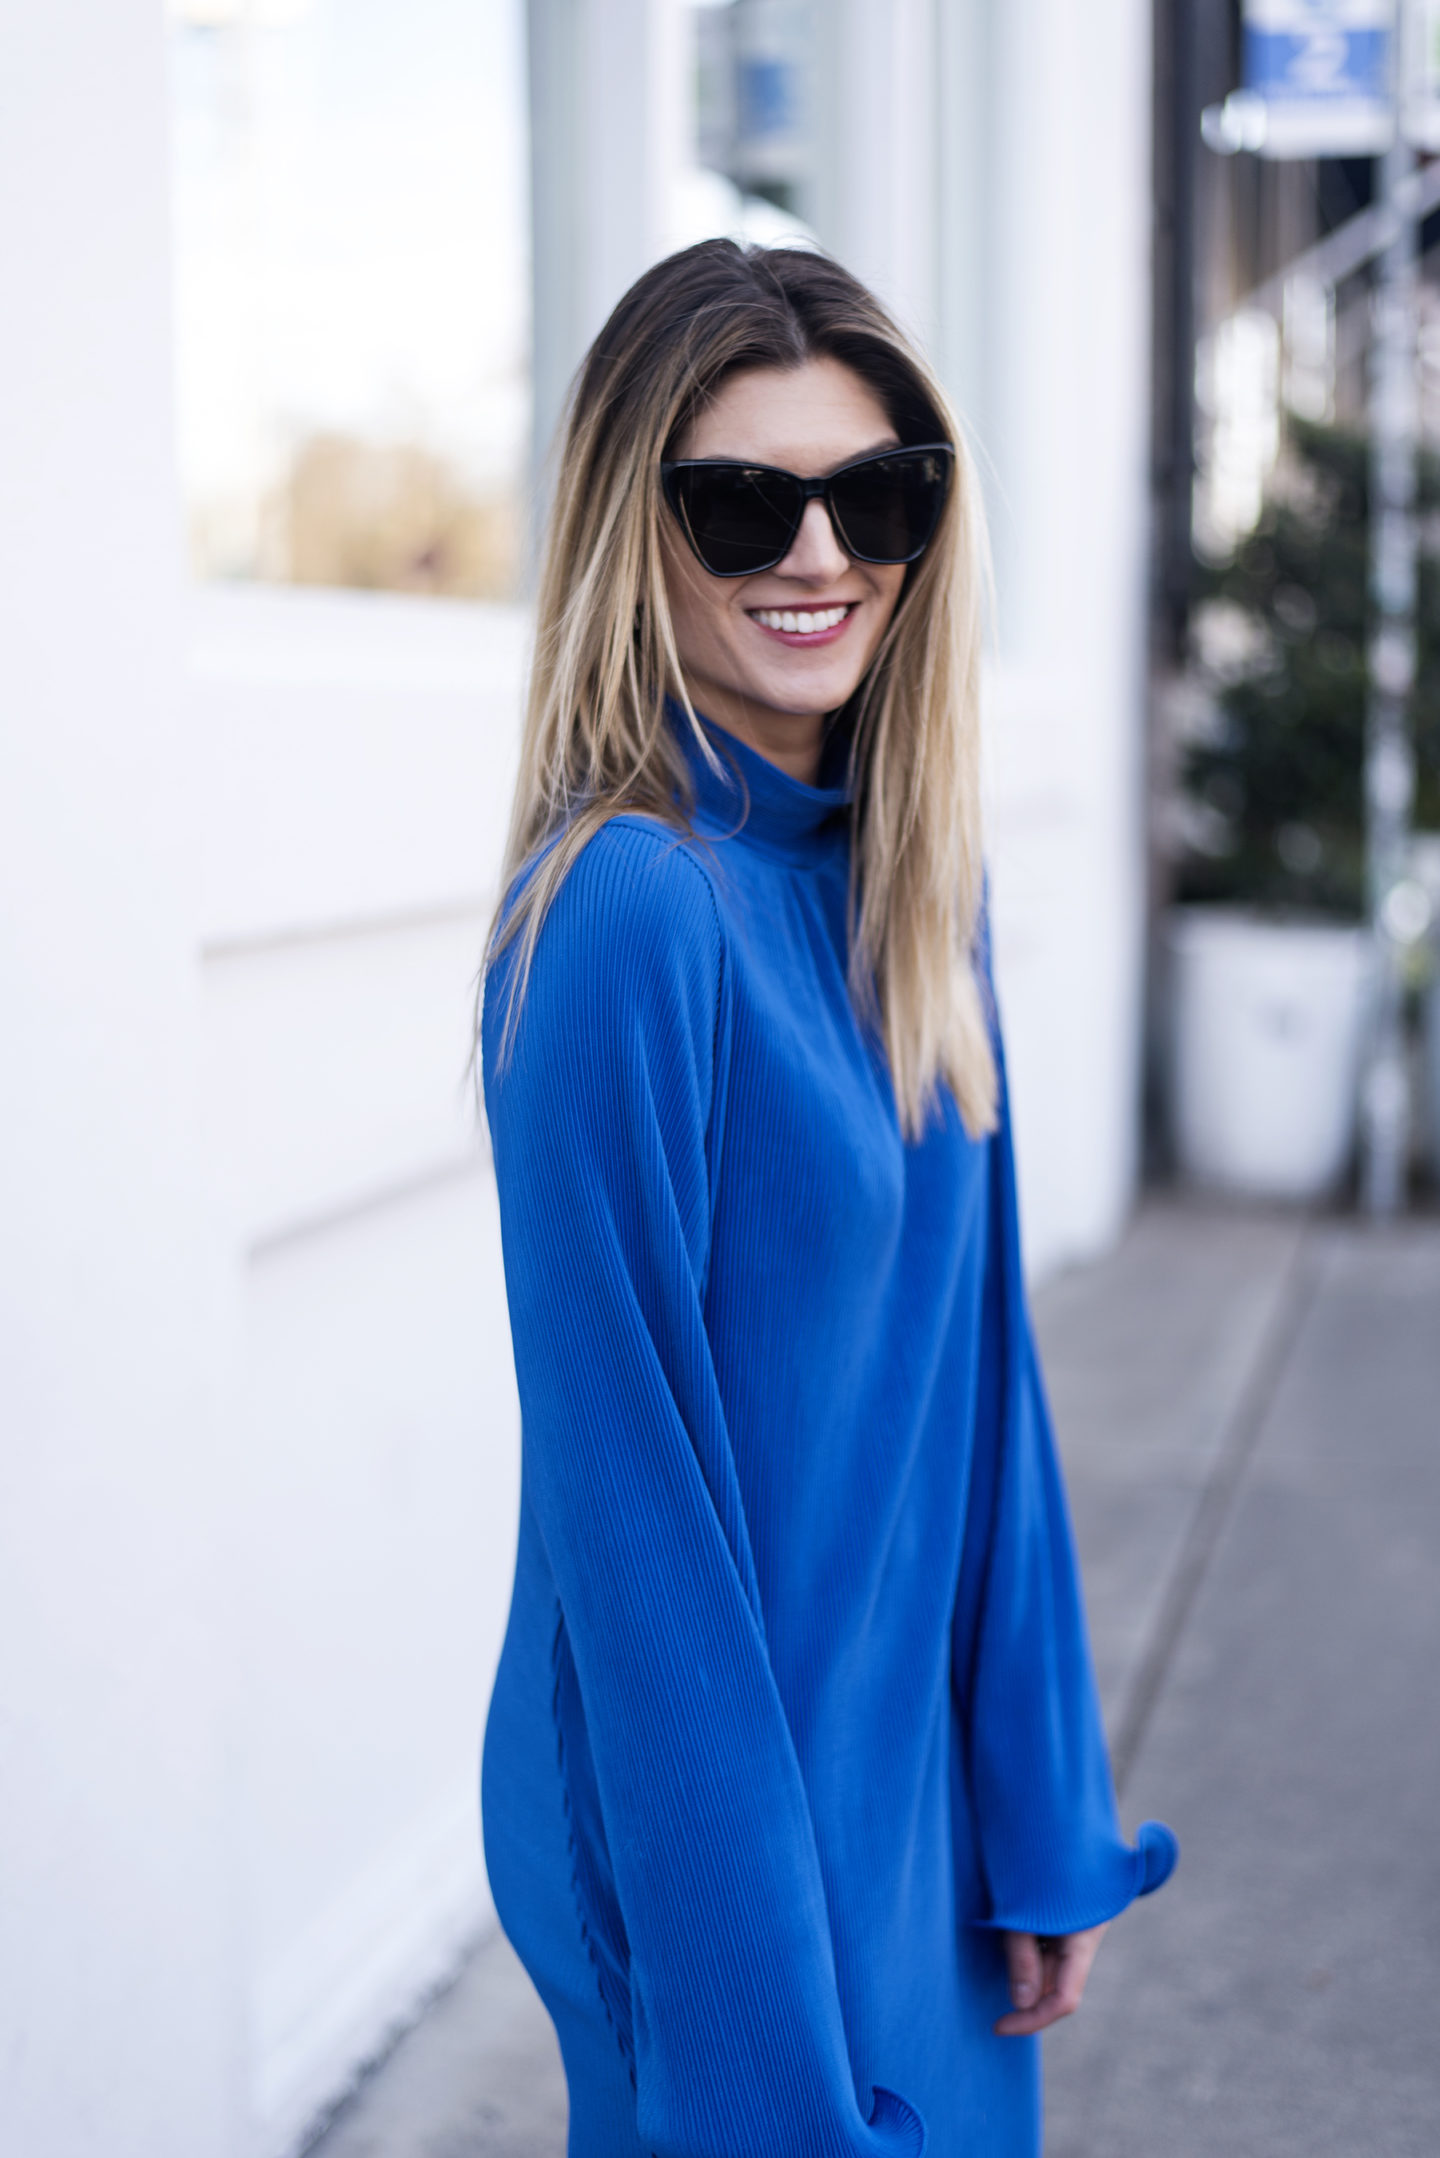 The Grey Edit-Blue Longsleeve Dress-Marc Jacobs Snapshot